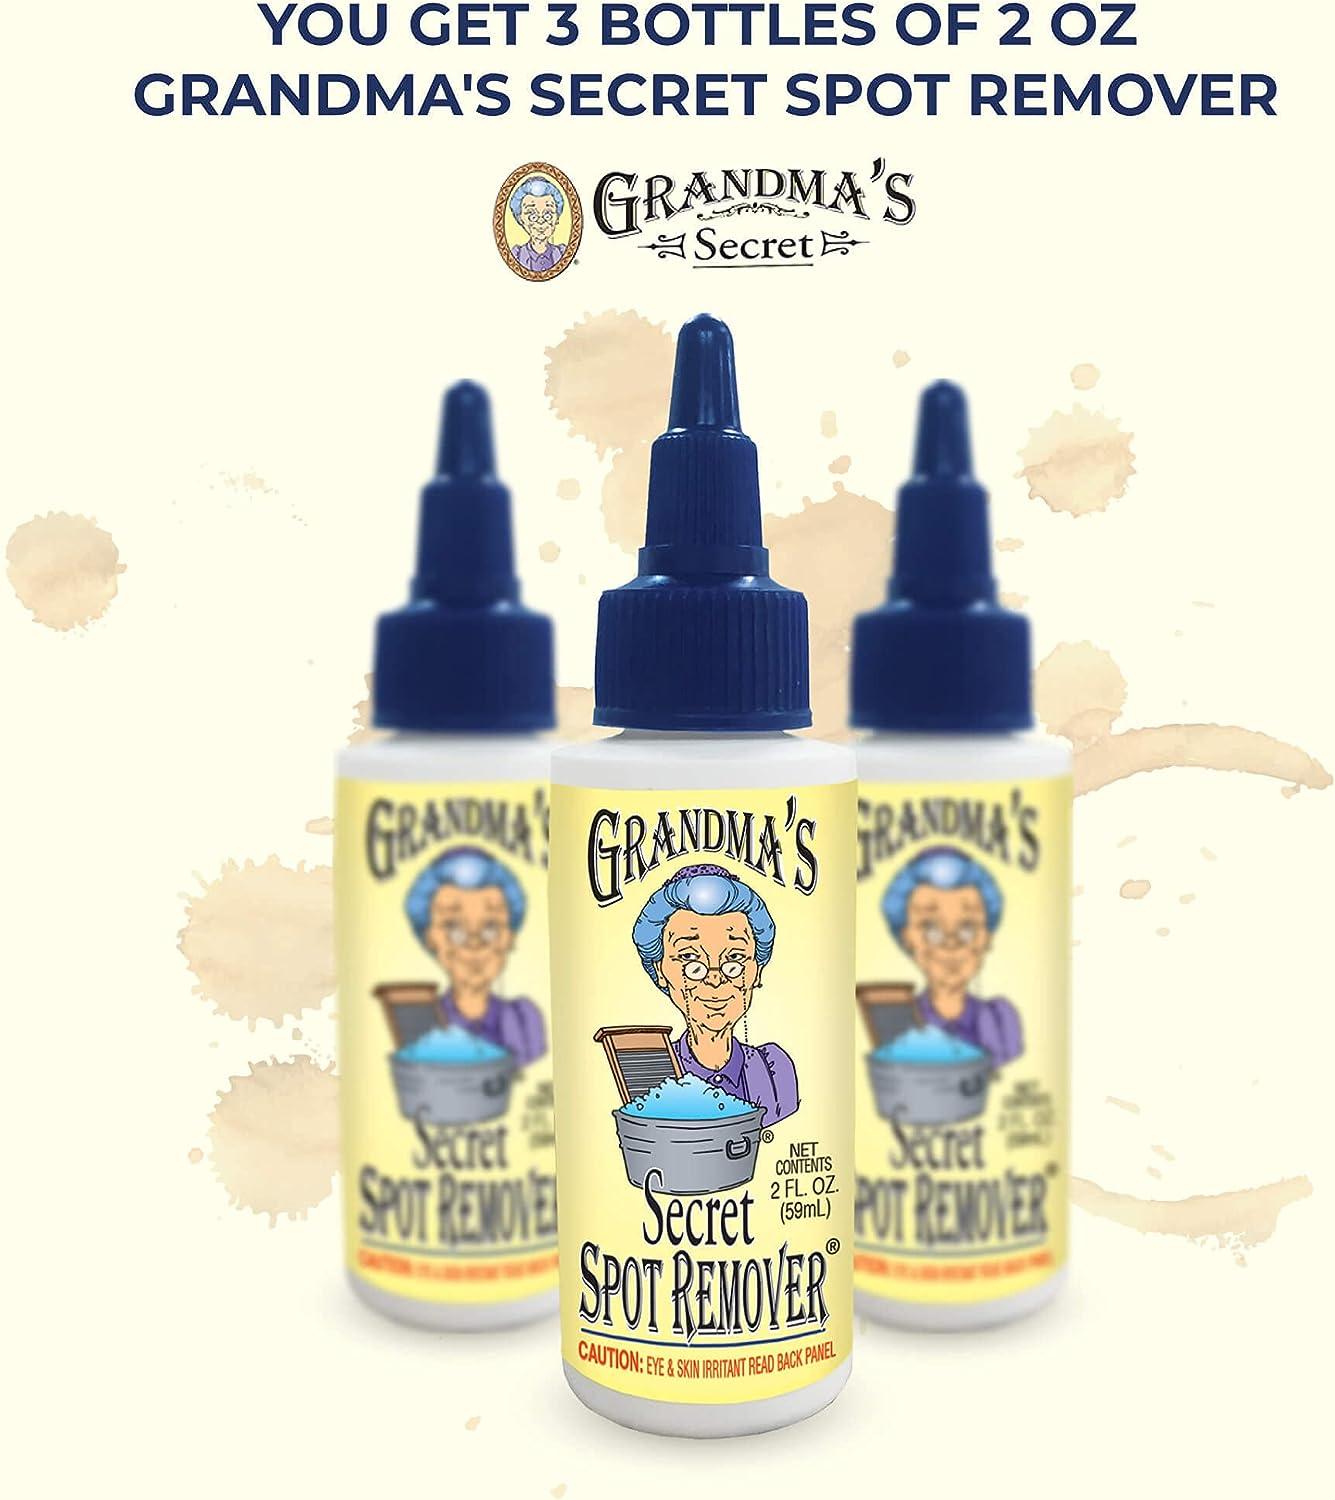 Grandma's Secret Spot Remover - 2 oz.